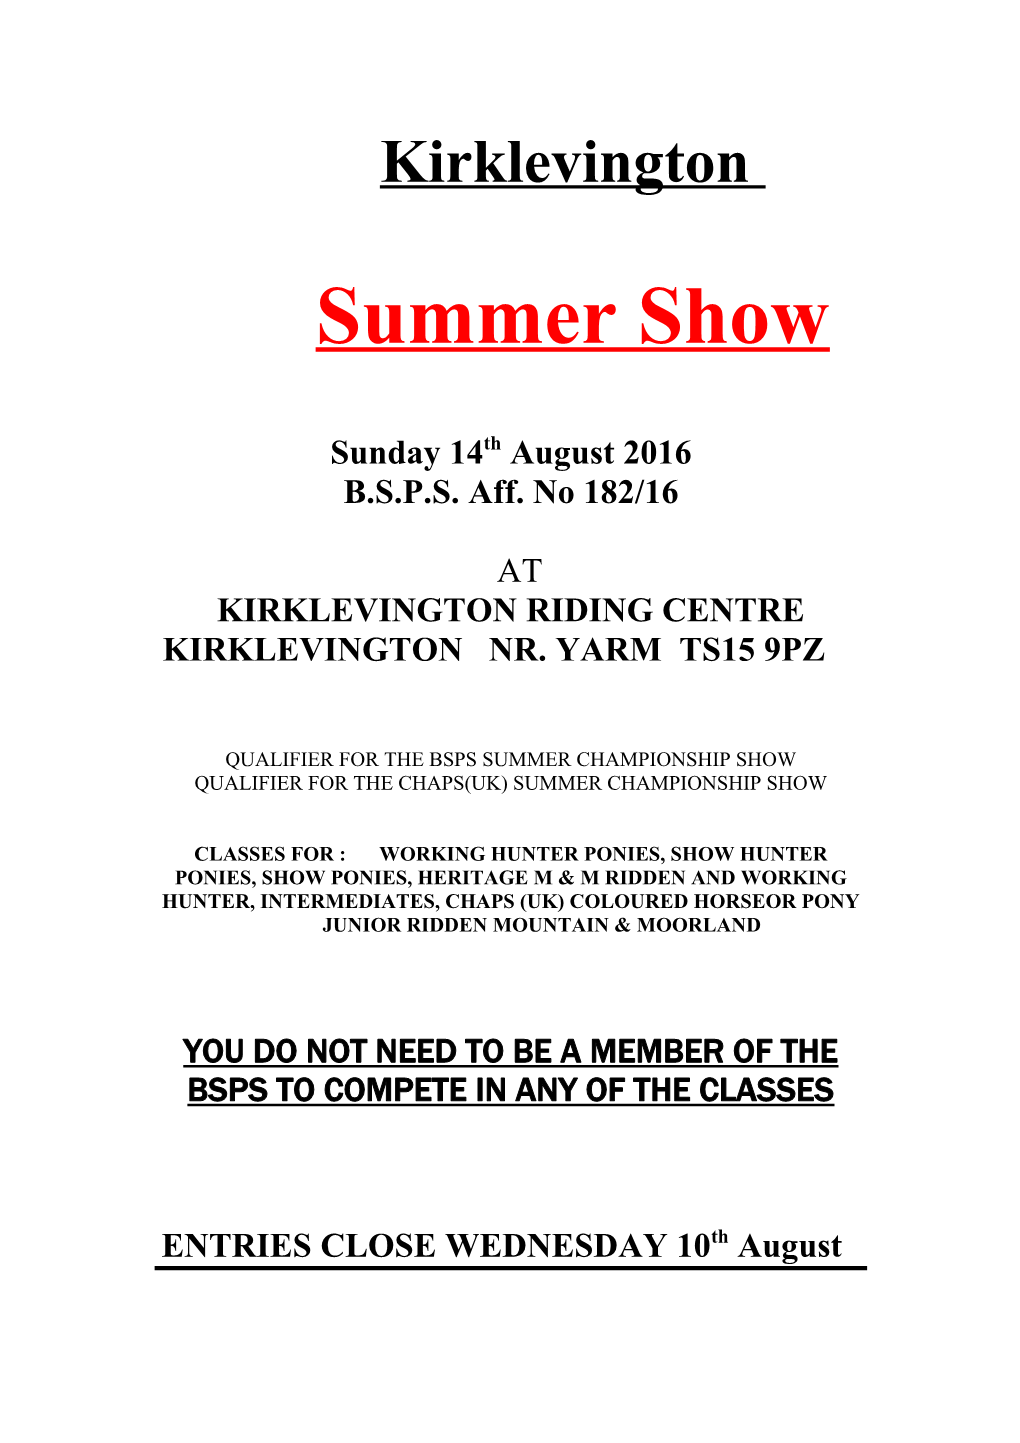 Kirklevington Riding Centre Summer Show